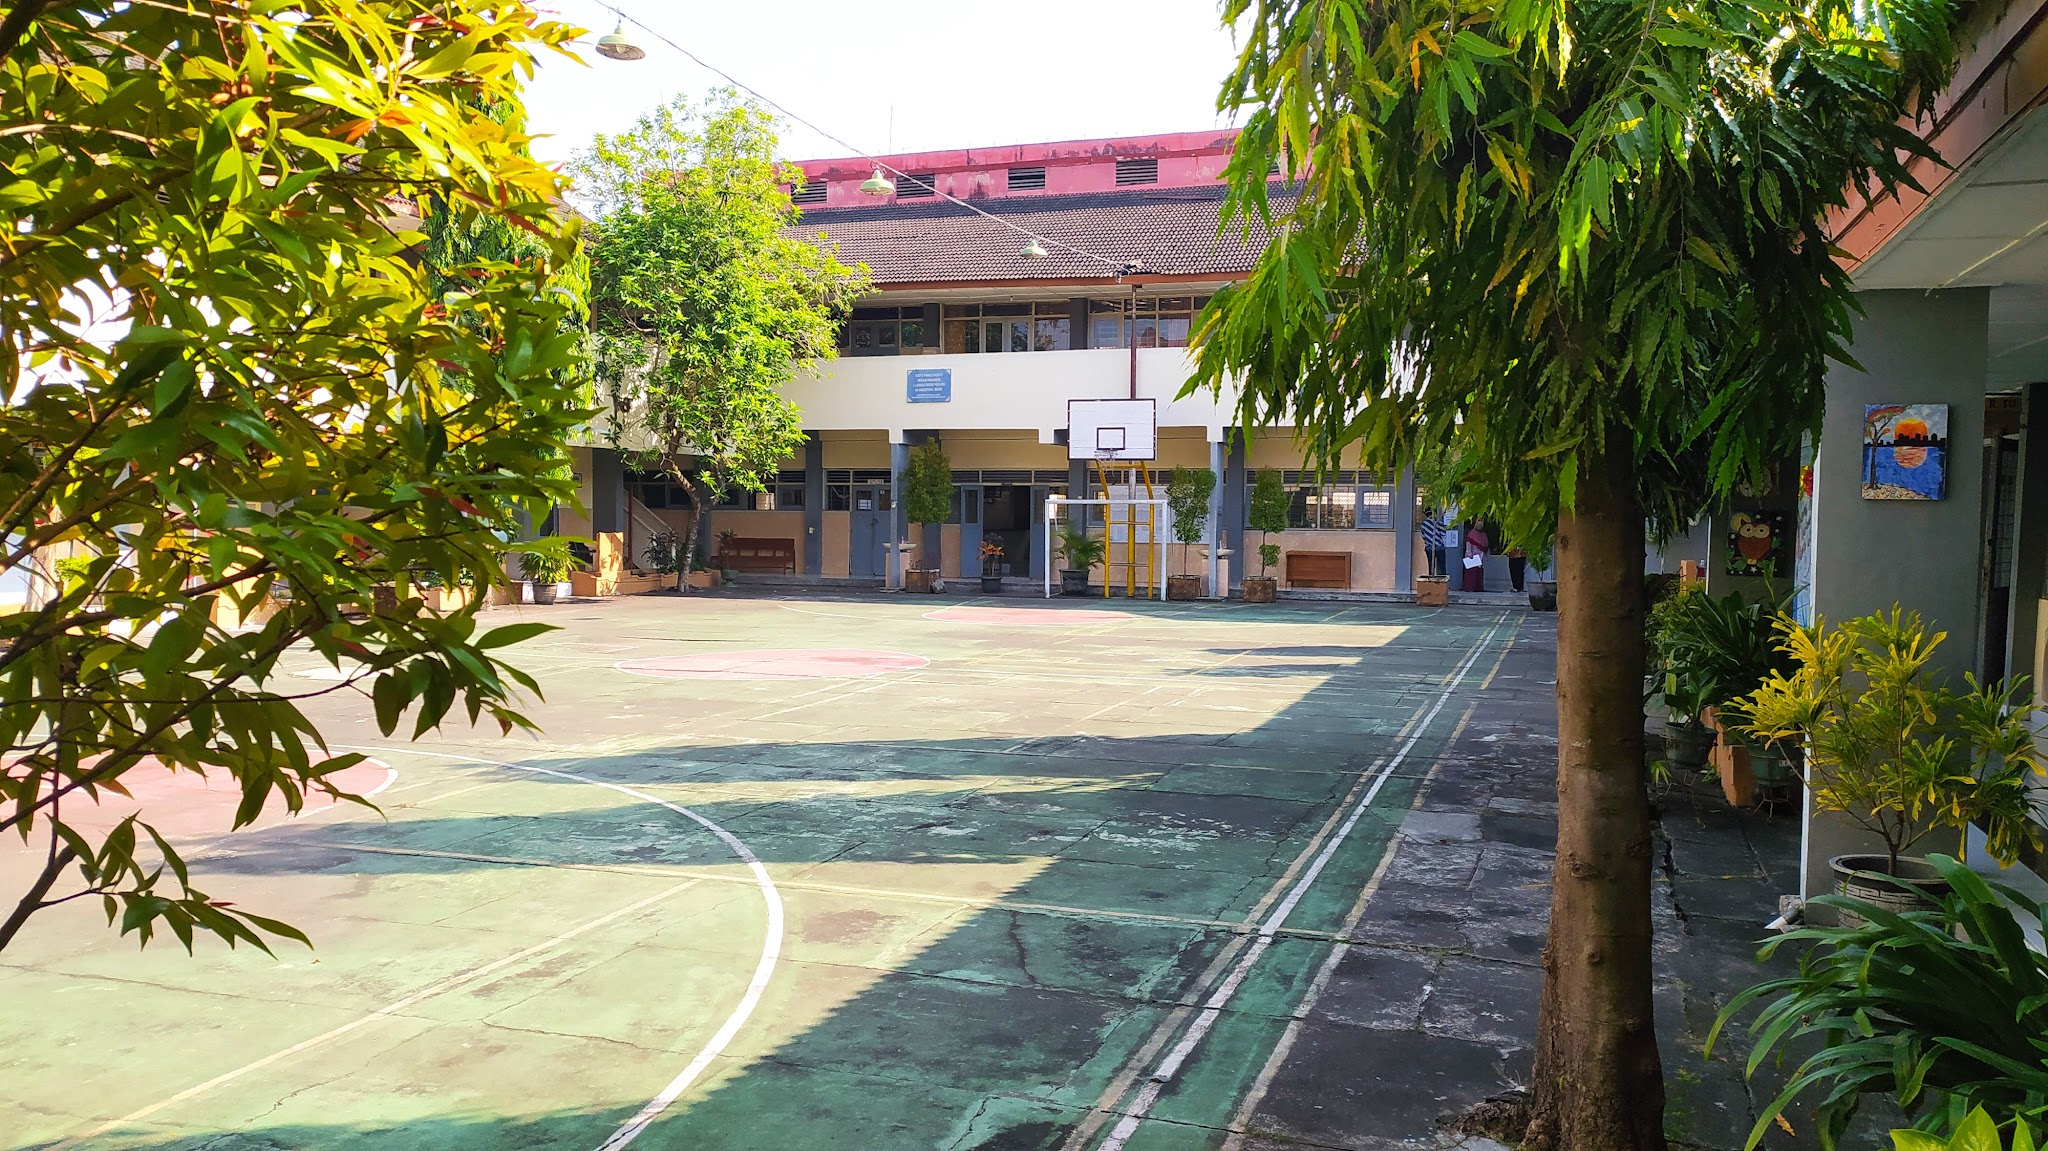 Foto SMP  Negeri 14 Yogyakarta, Kota Yogyakarta